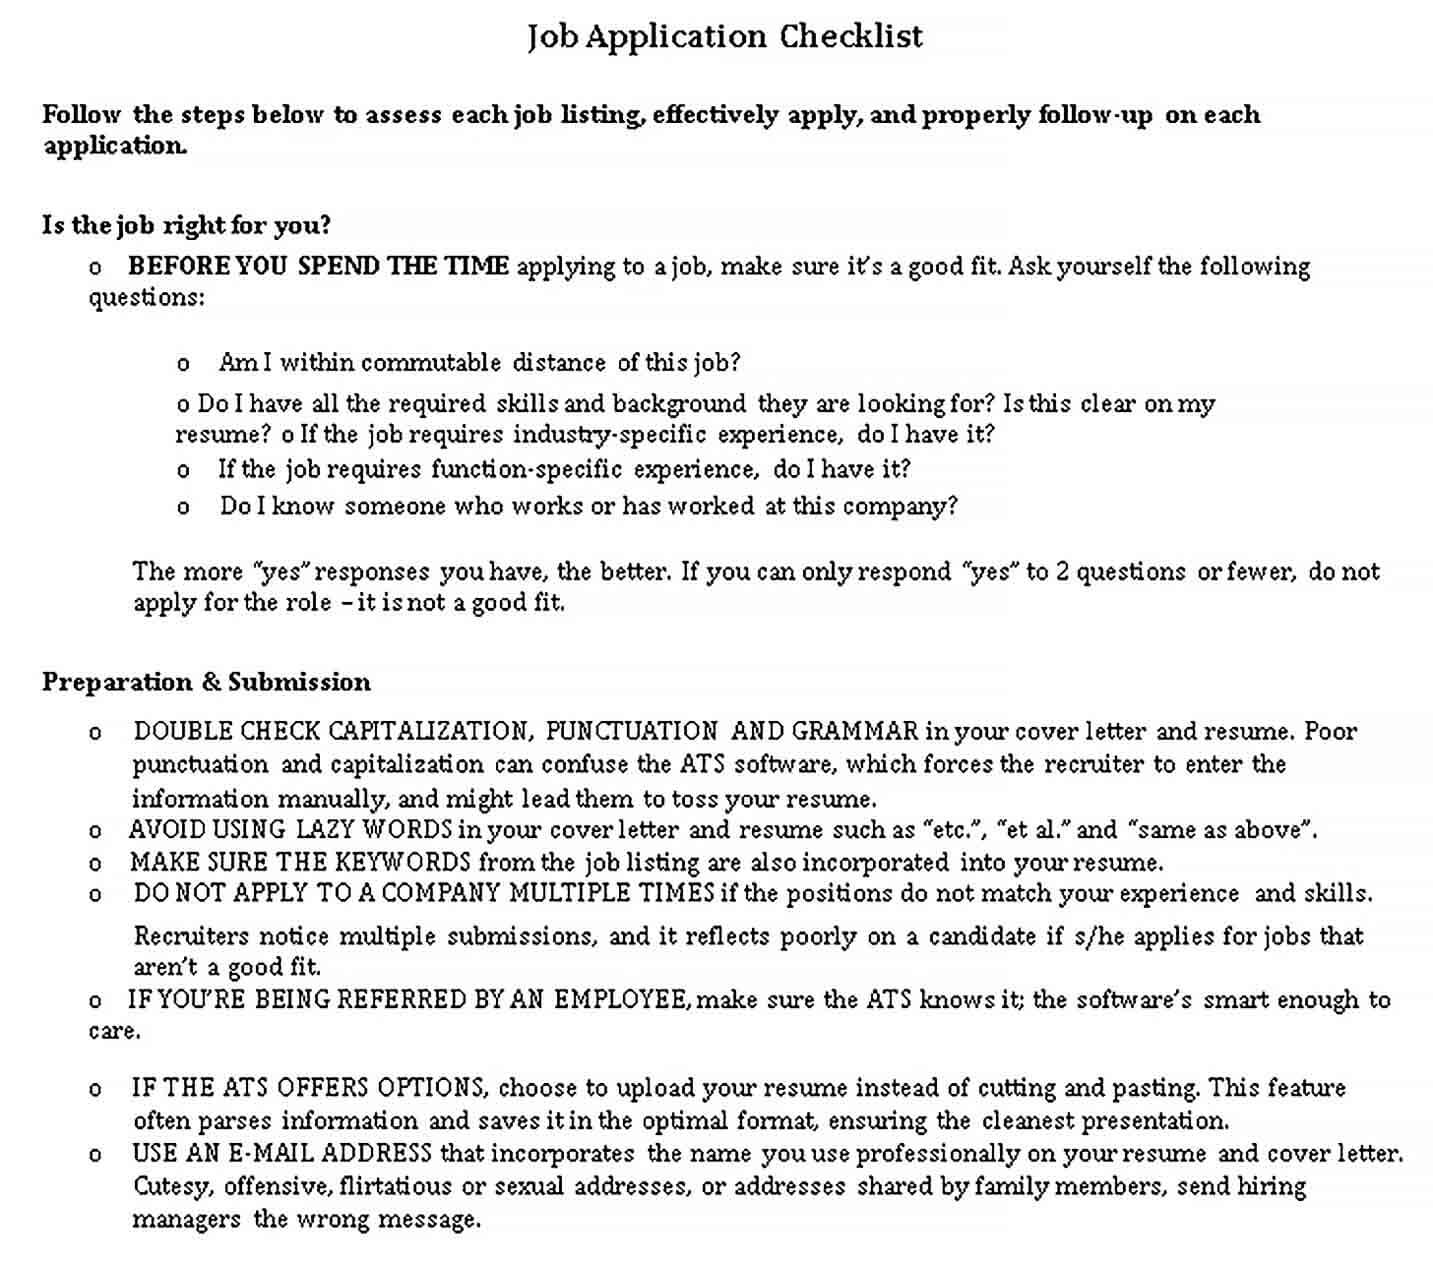 Job Application Checklist